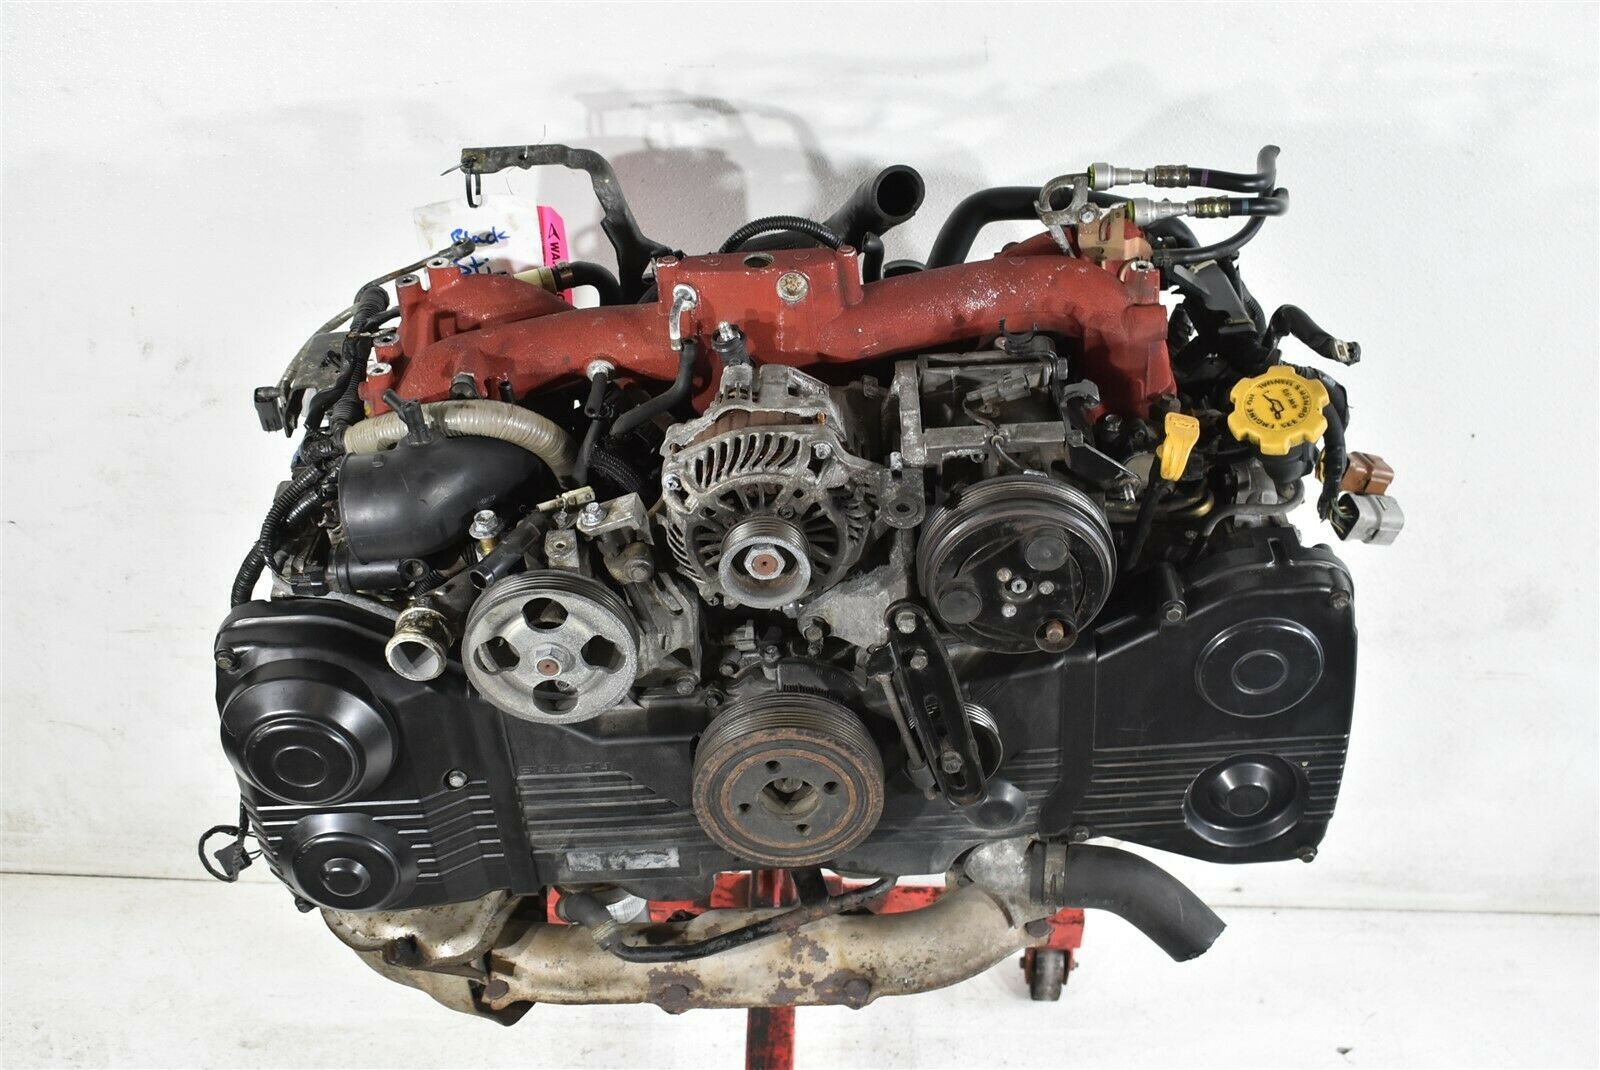 Subaru 2.5L turbo H4 engine